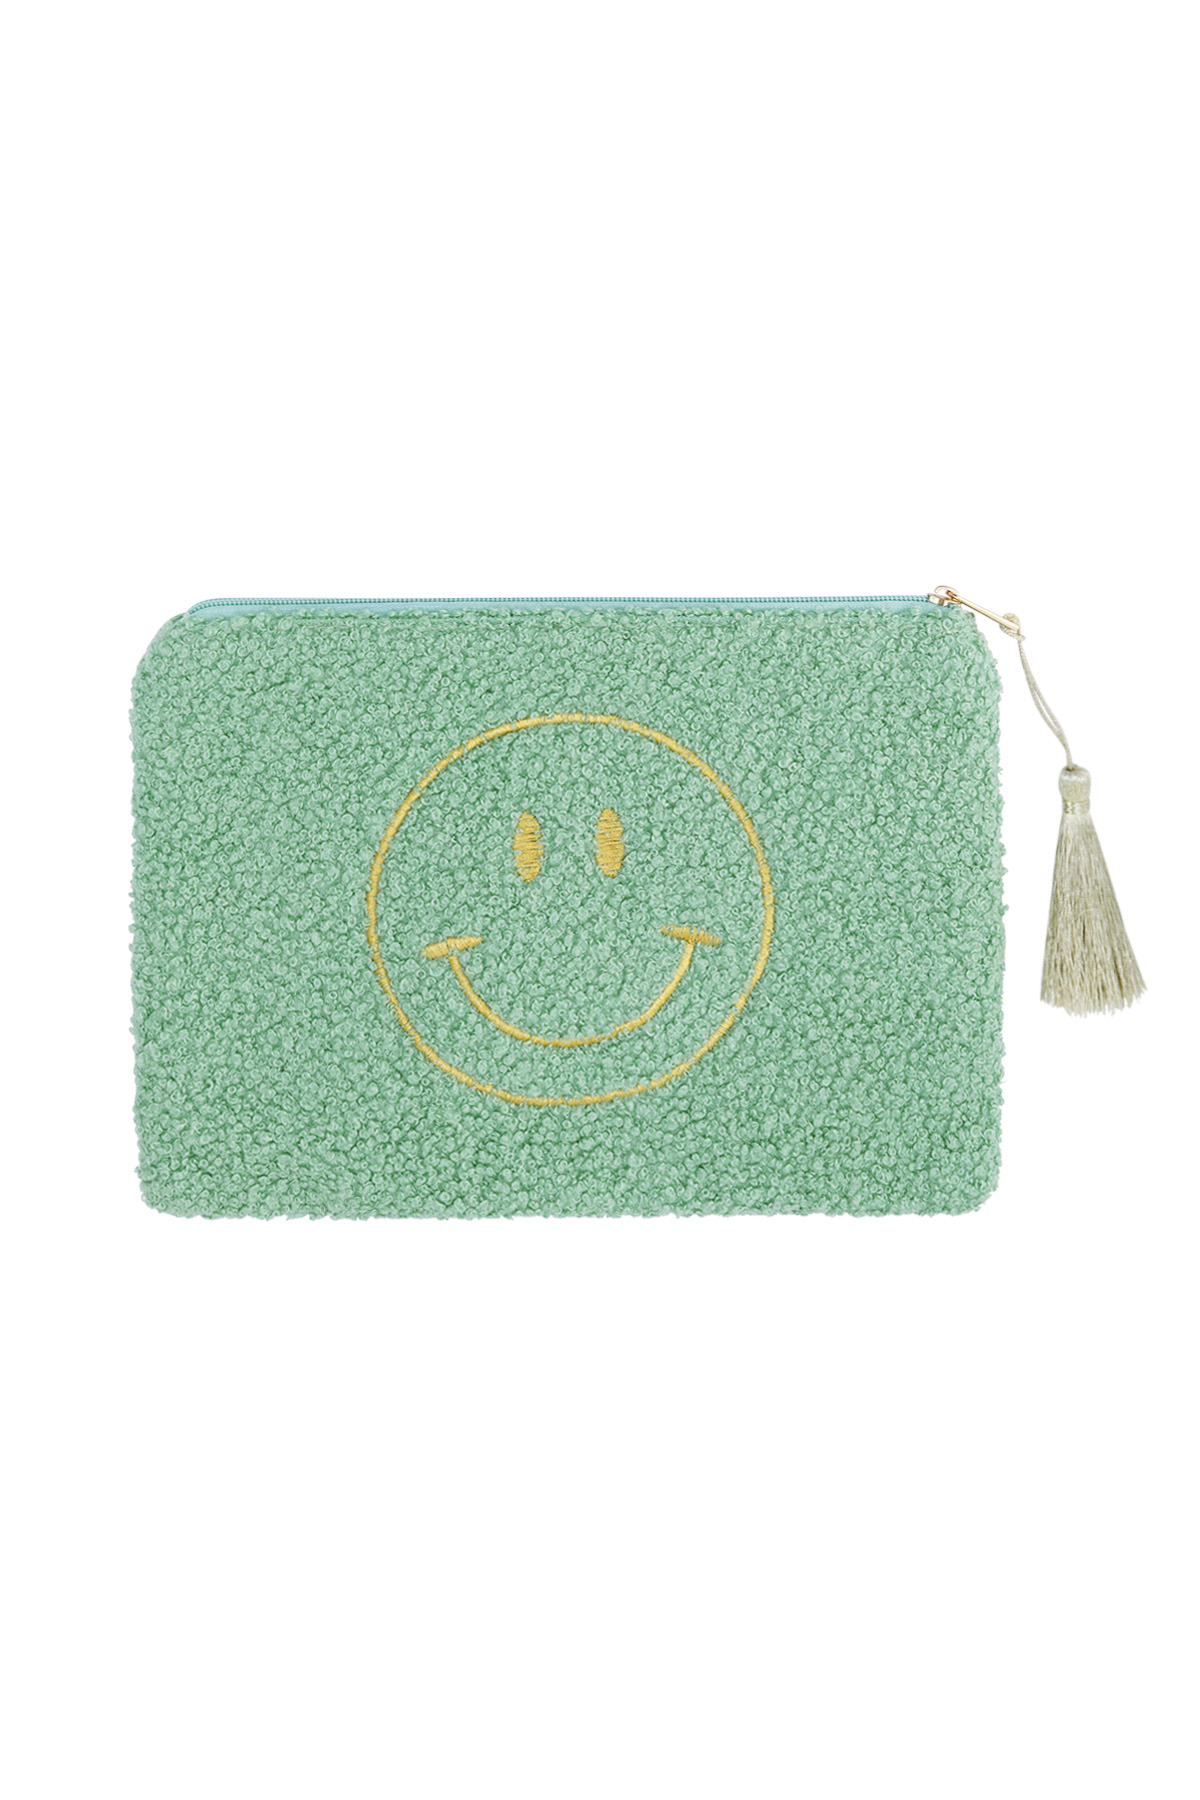 Makyaj çantası teddy smiley - yeşil h5 